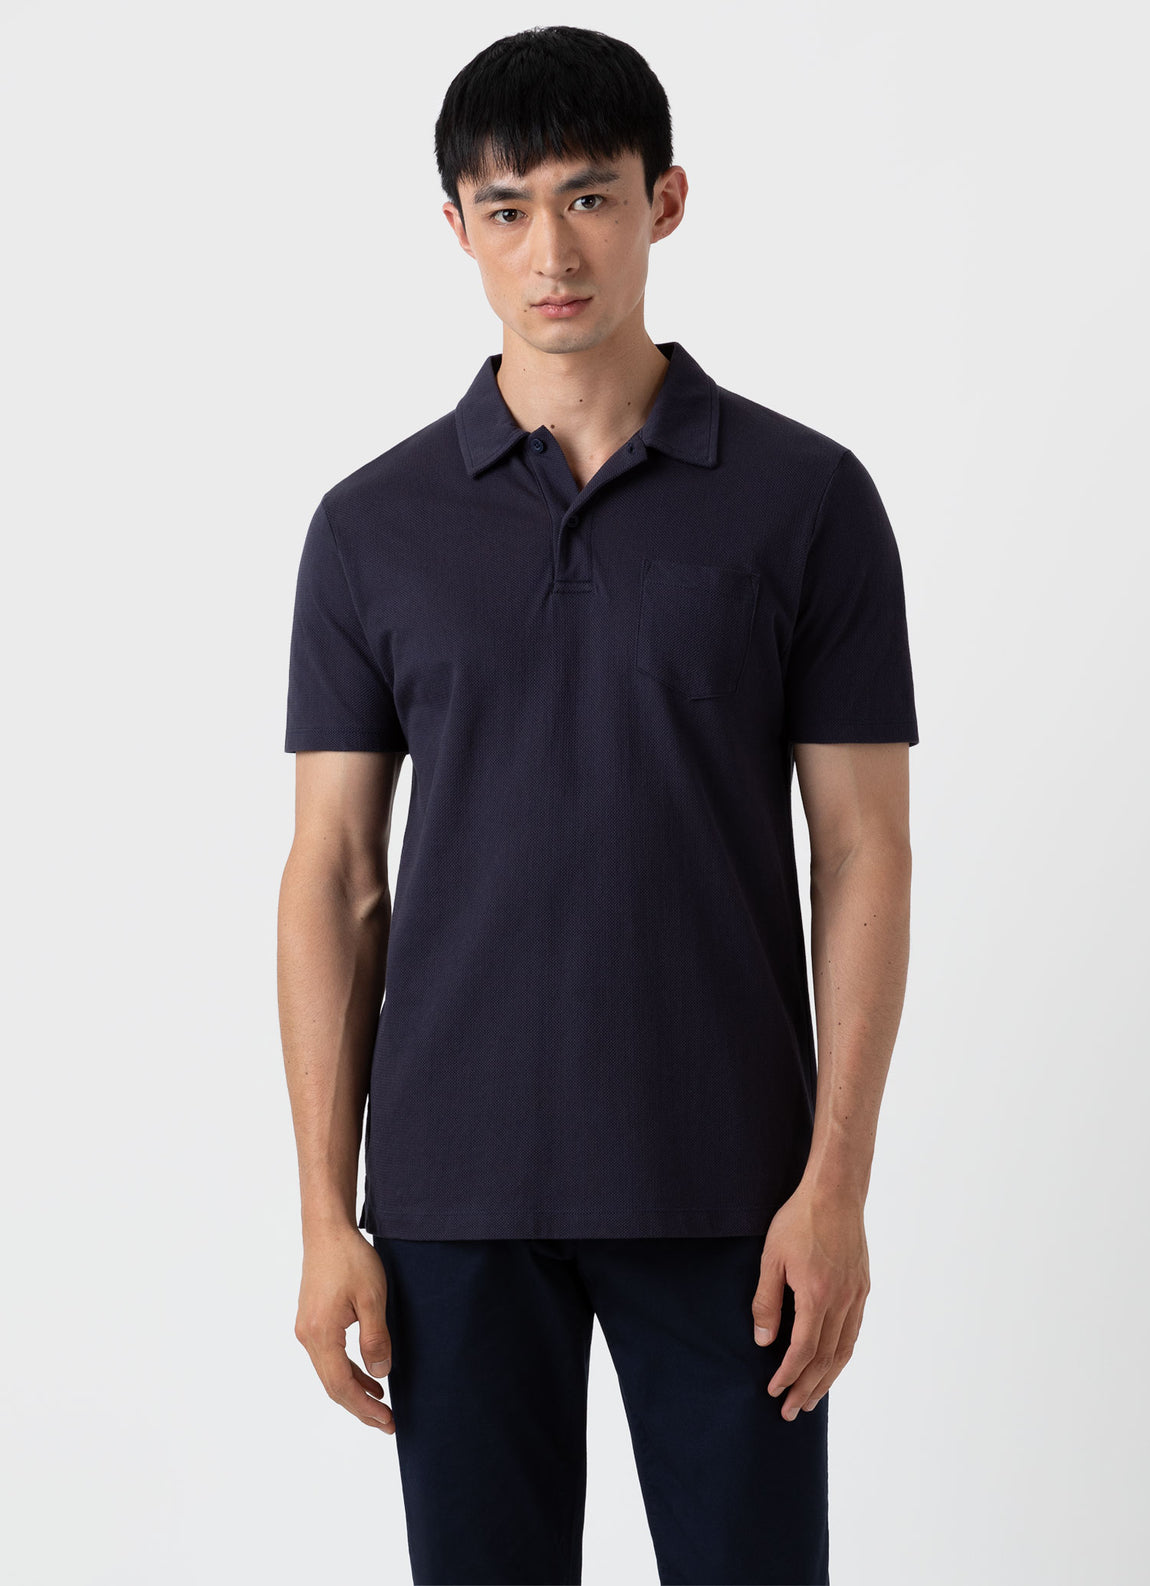 smog Kanon feit Men's Cotton Riviera Polo Shirt in Navy | Sunspel